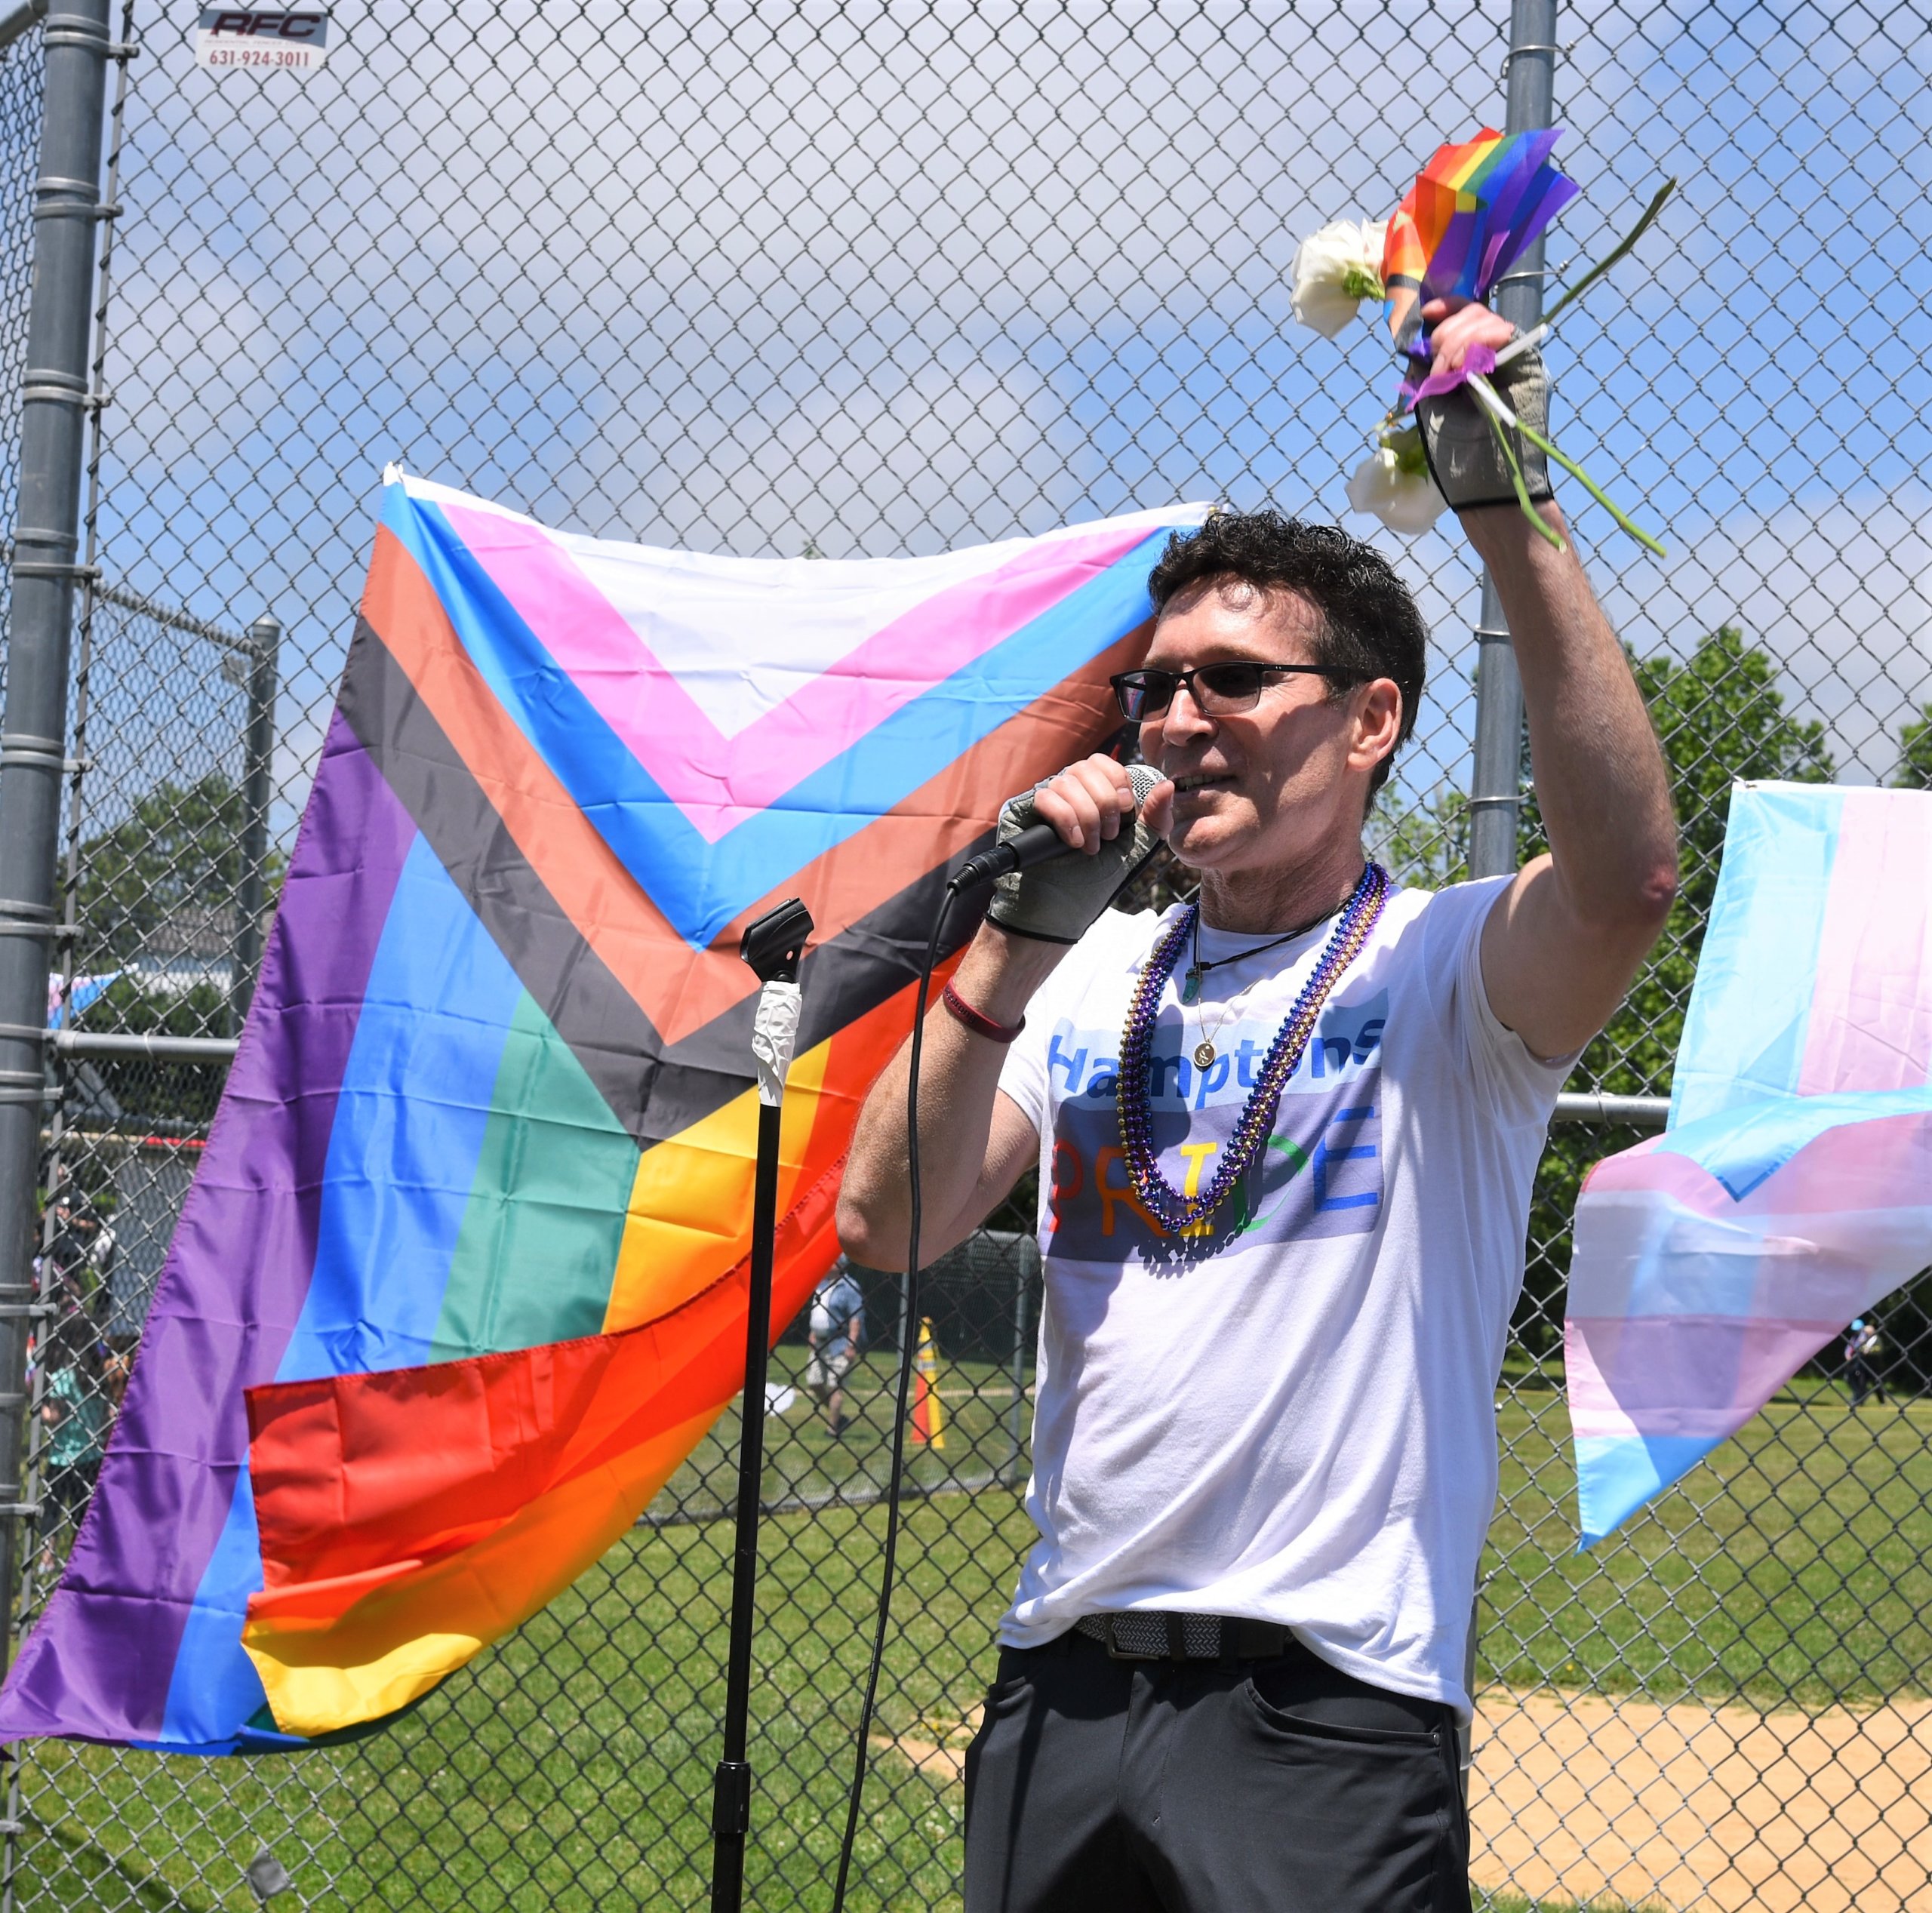 Hamptons Pride organizer Tom House